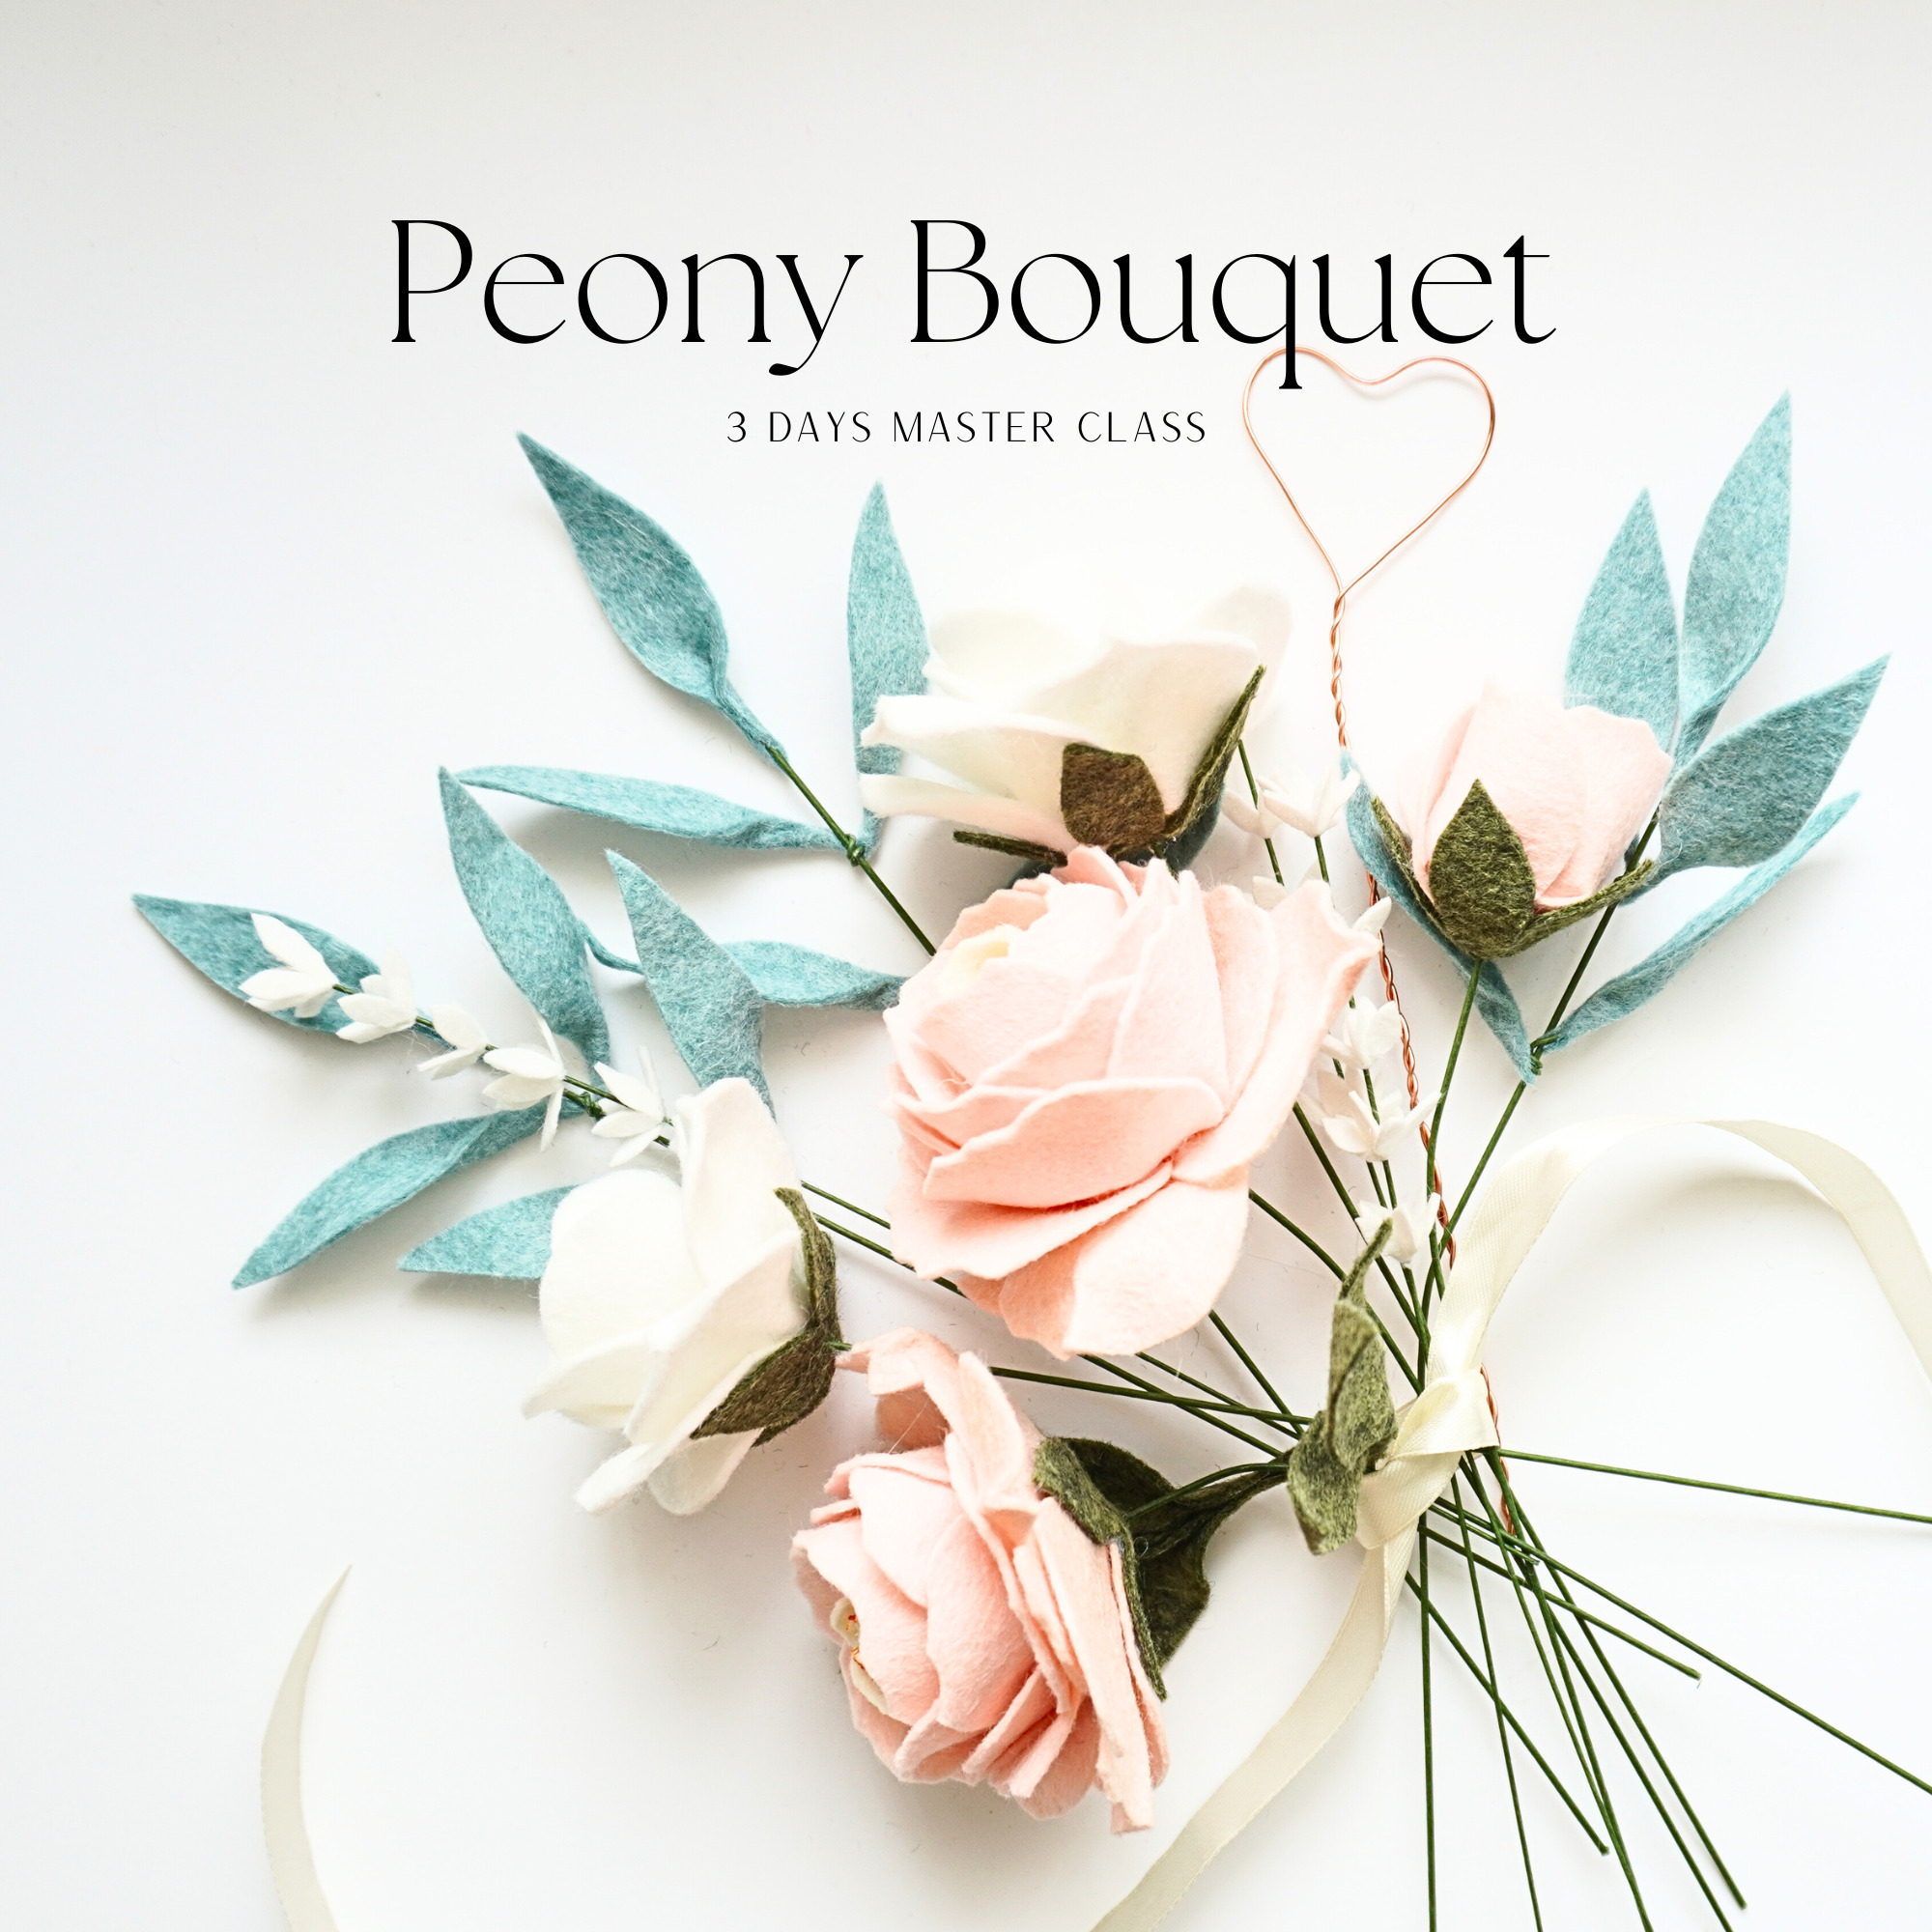 Peony Bouquet 3 days Master Class